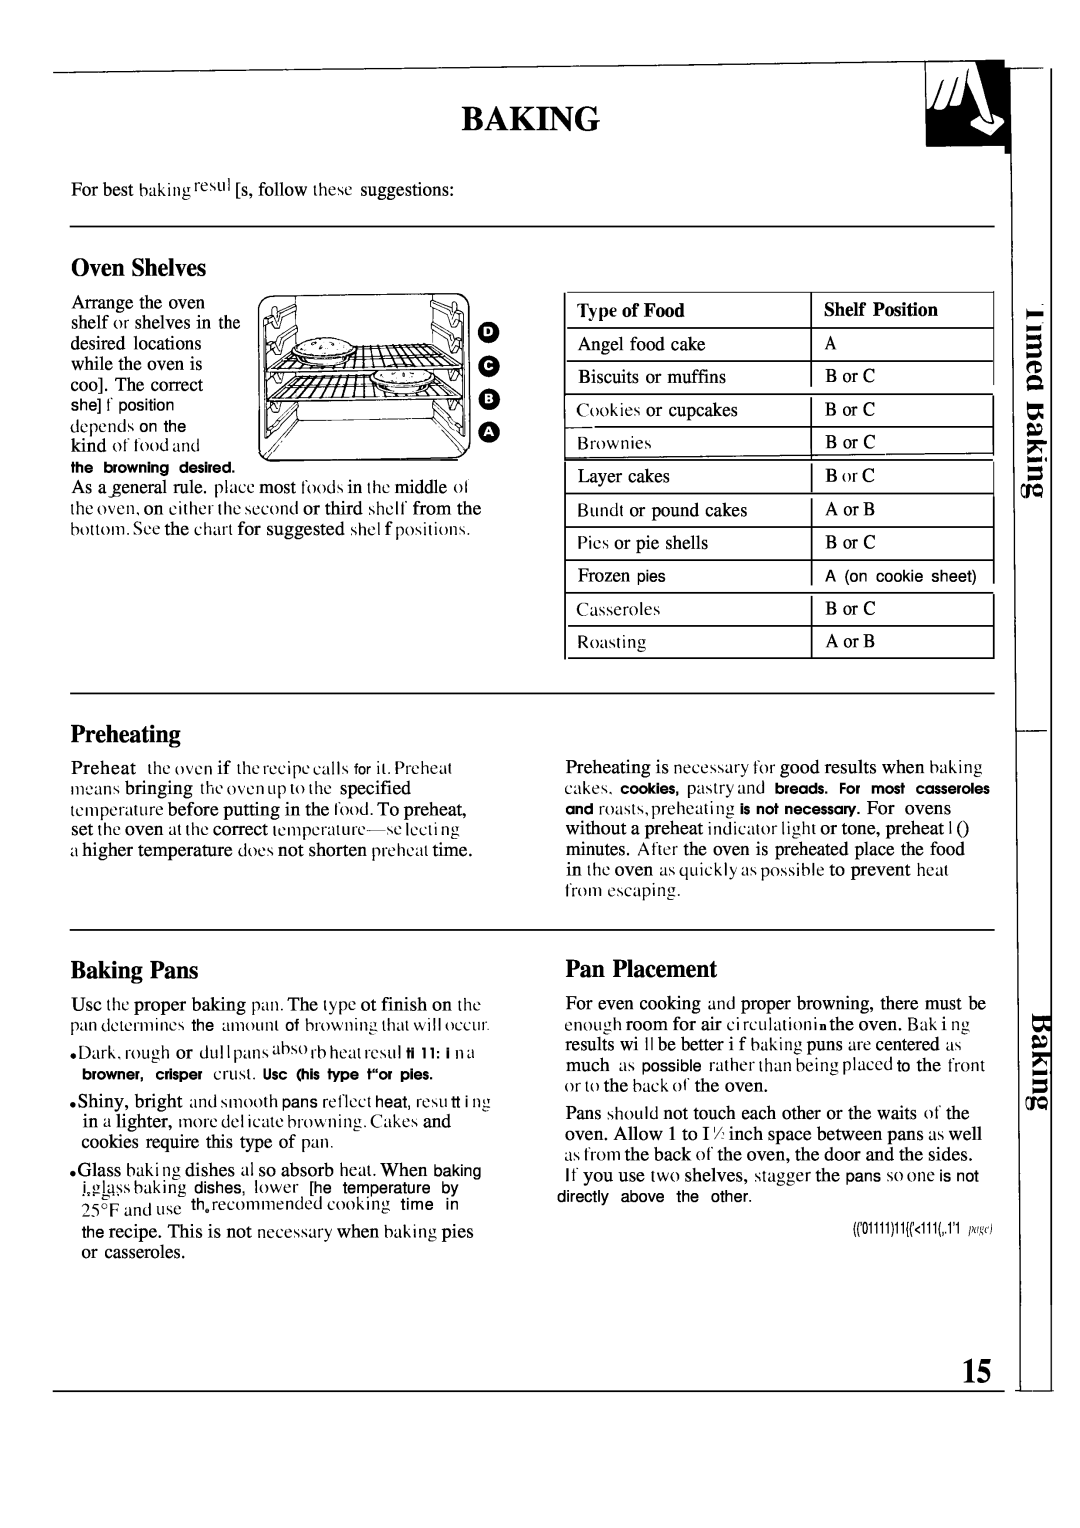 GE JGSP31GER, JGSP40AES, JGSP30GER manual Preheating, Baking Pans, Pan Placement, Oven Shelves 